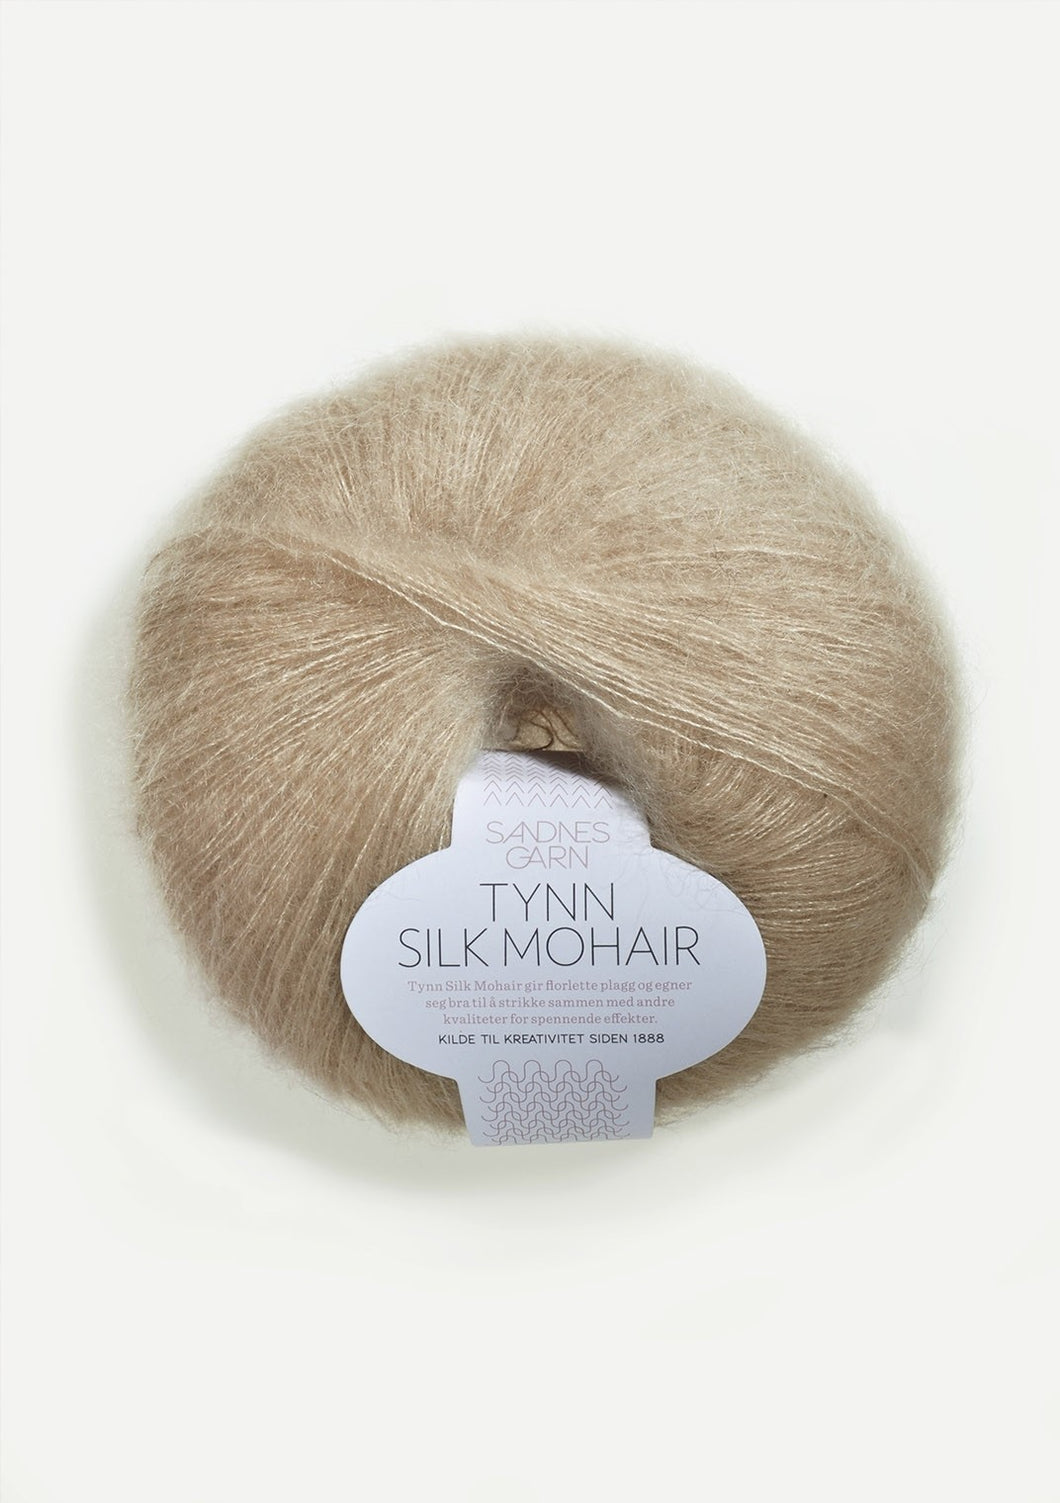 Sandnes Tynn Silk Mohair - Light Beige 3021